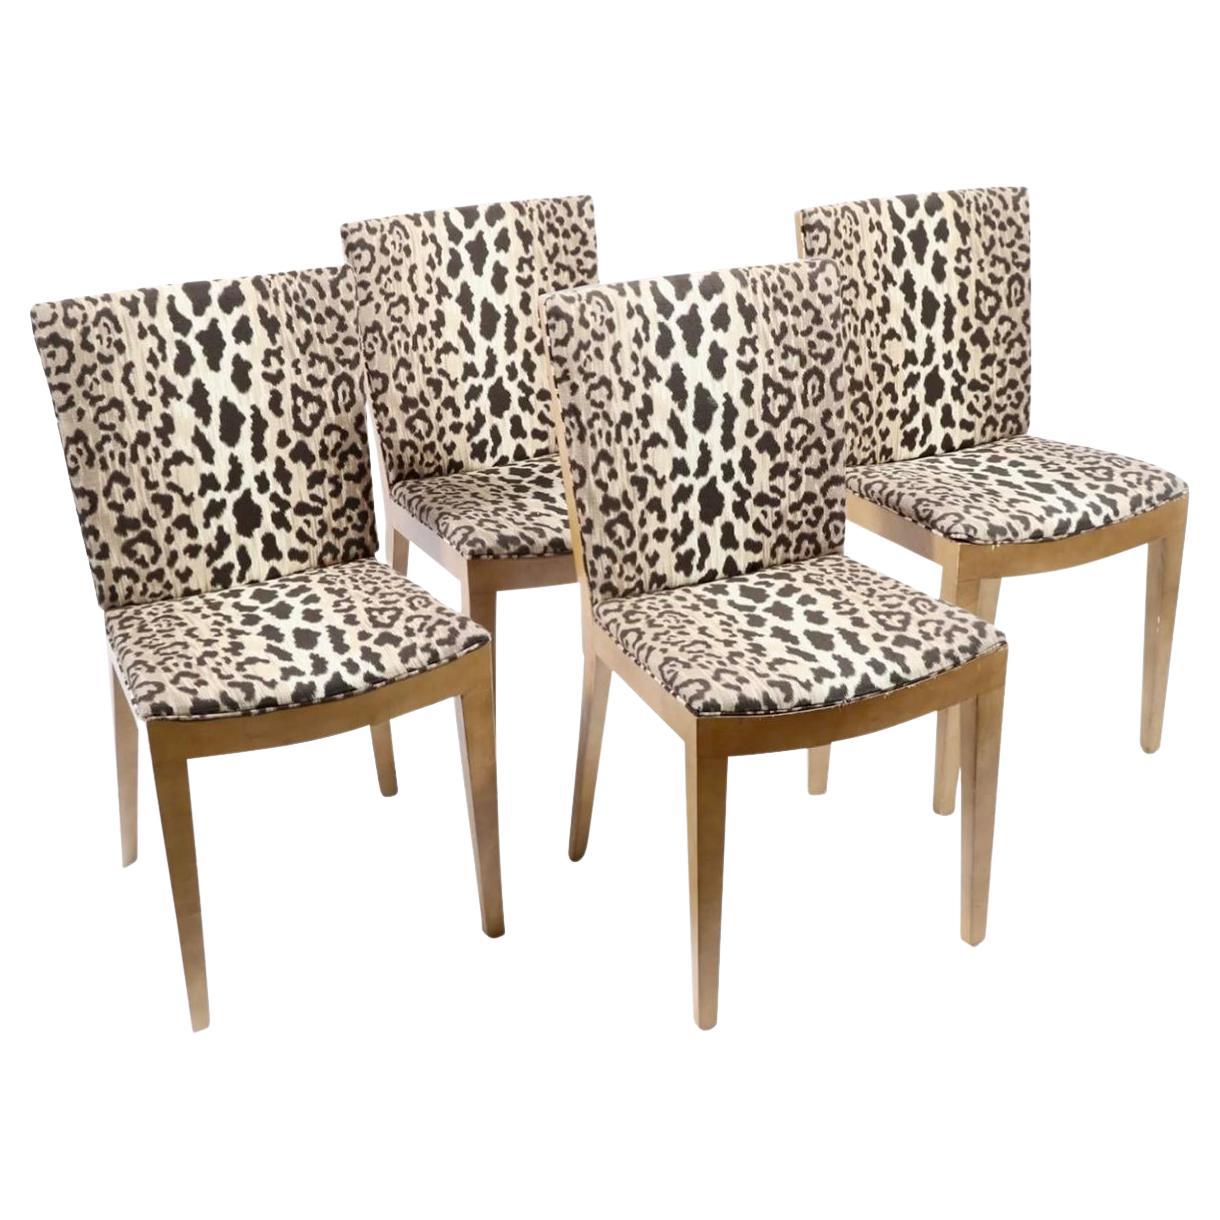 Set of 4 Karl Springer Goatskin Jmf Chairs W Cheetah Seats For Sale